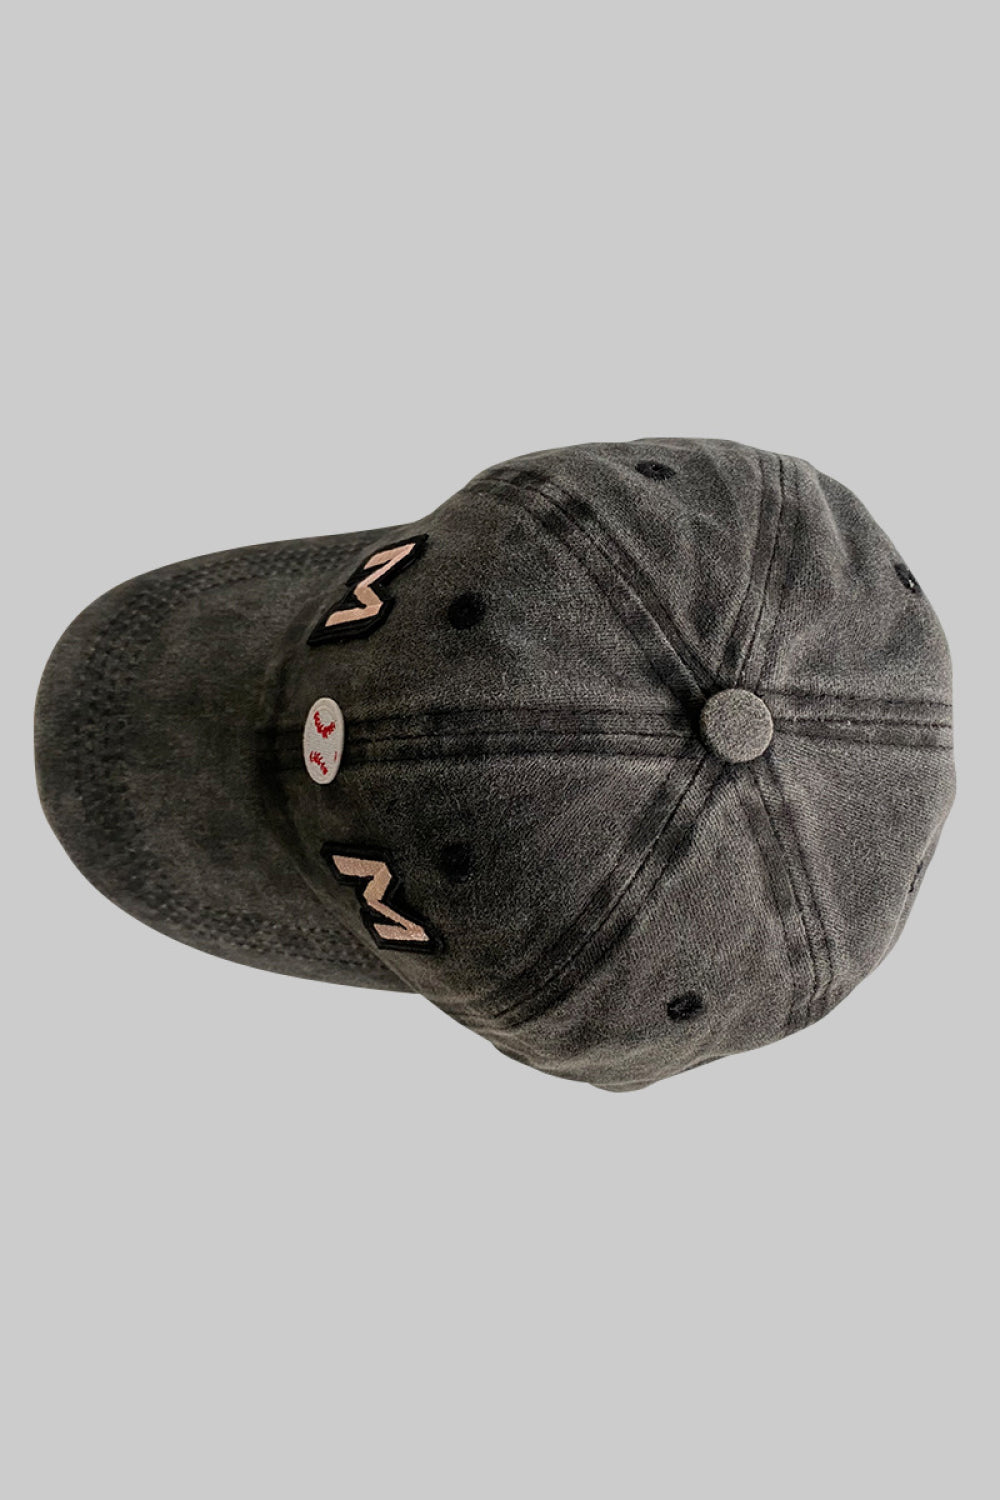 BASEBALL MOM Distressed Black Faded Baseball Style Cap Hat